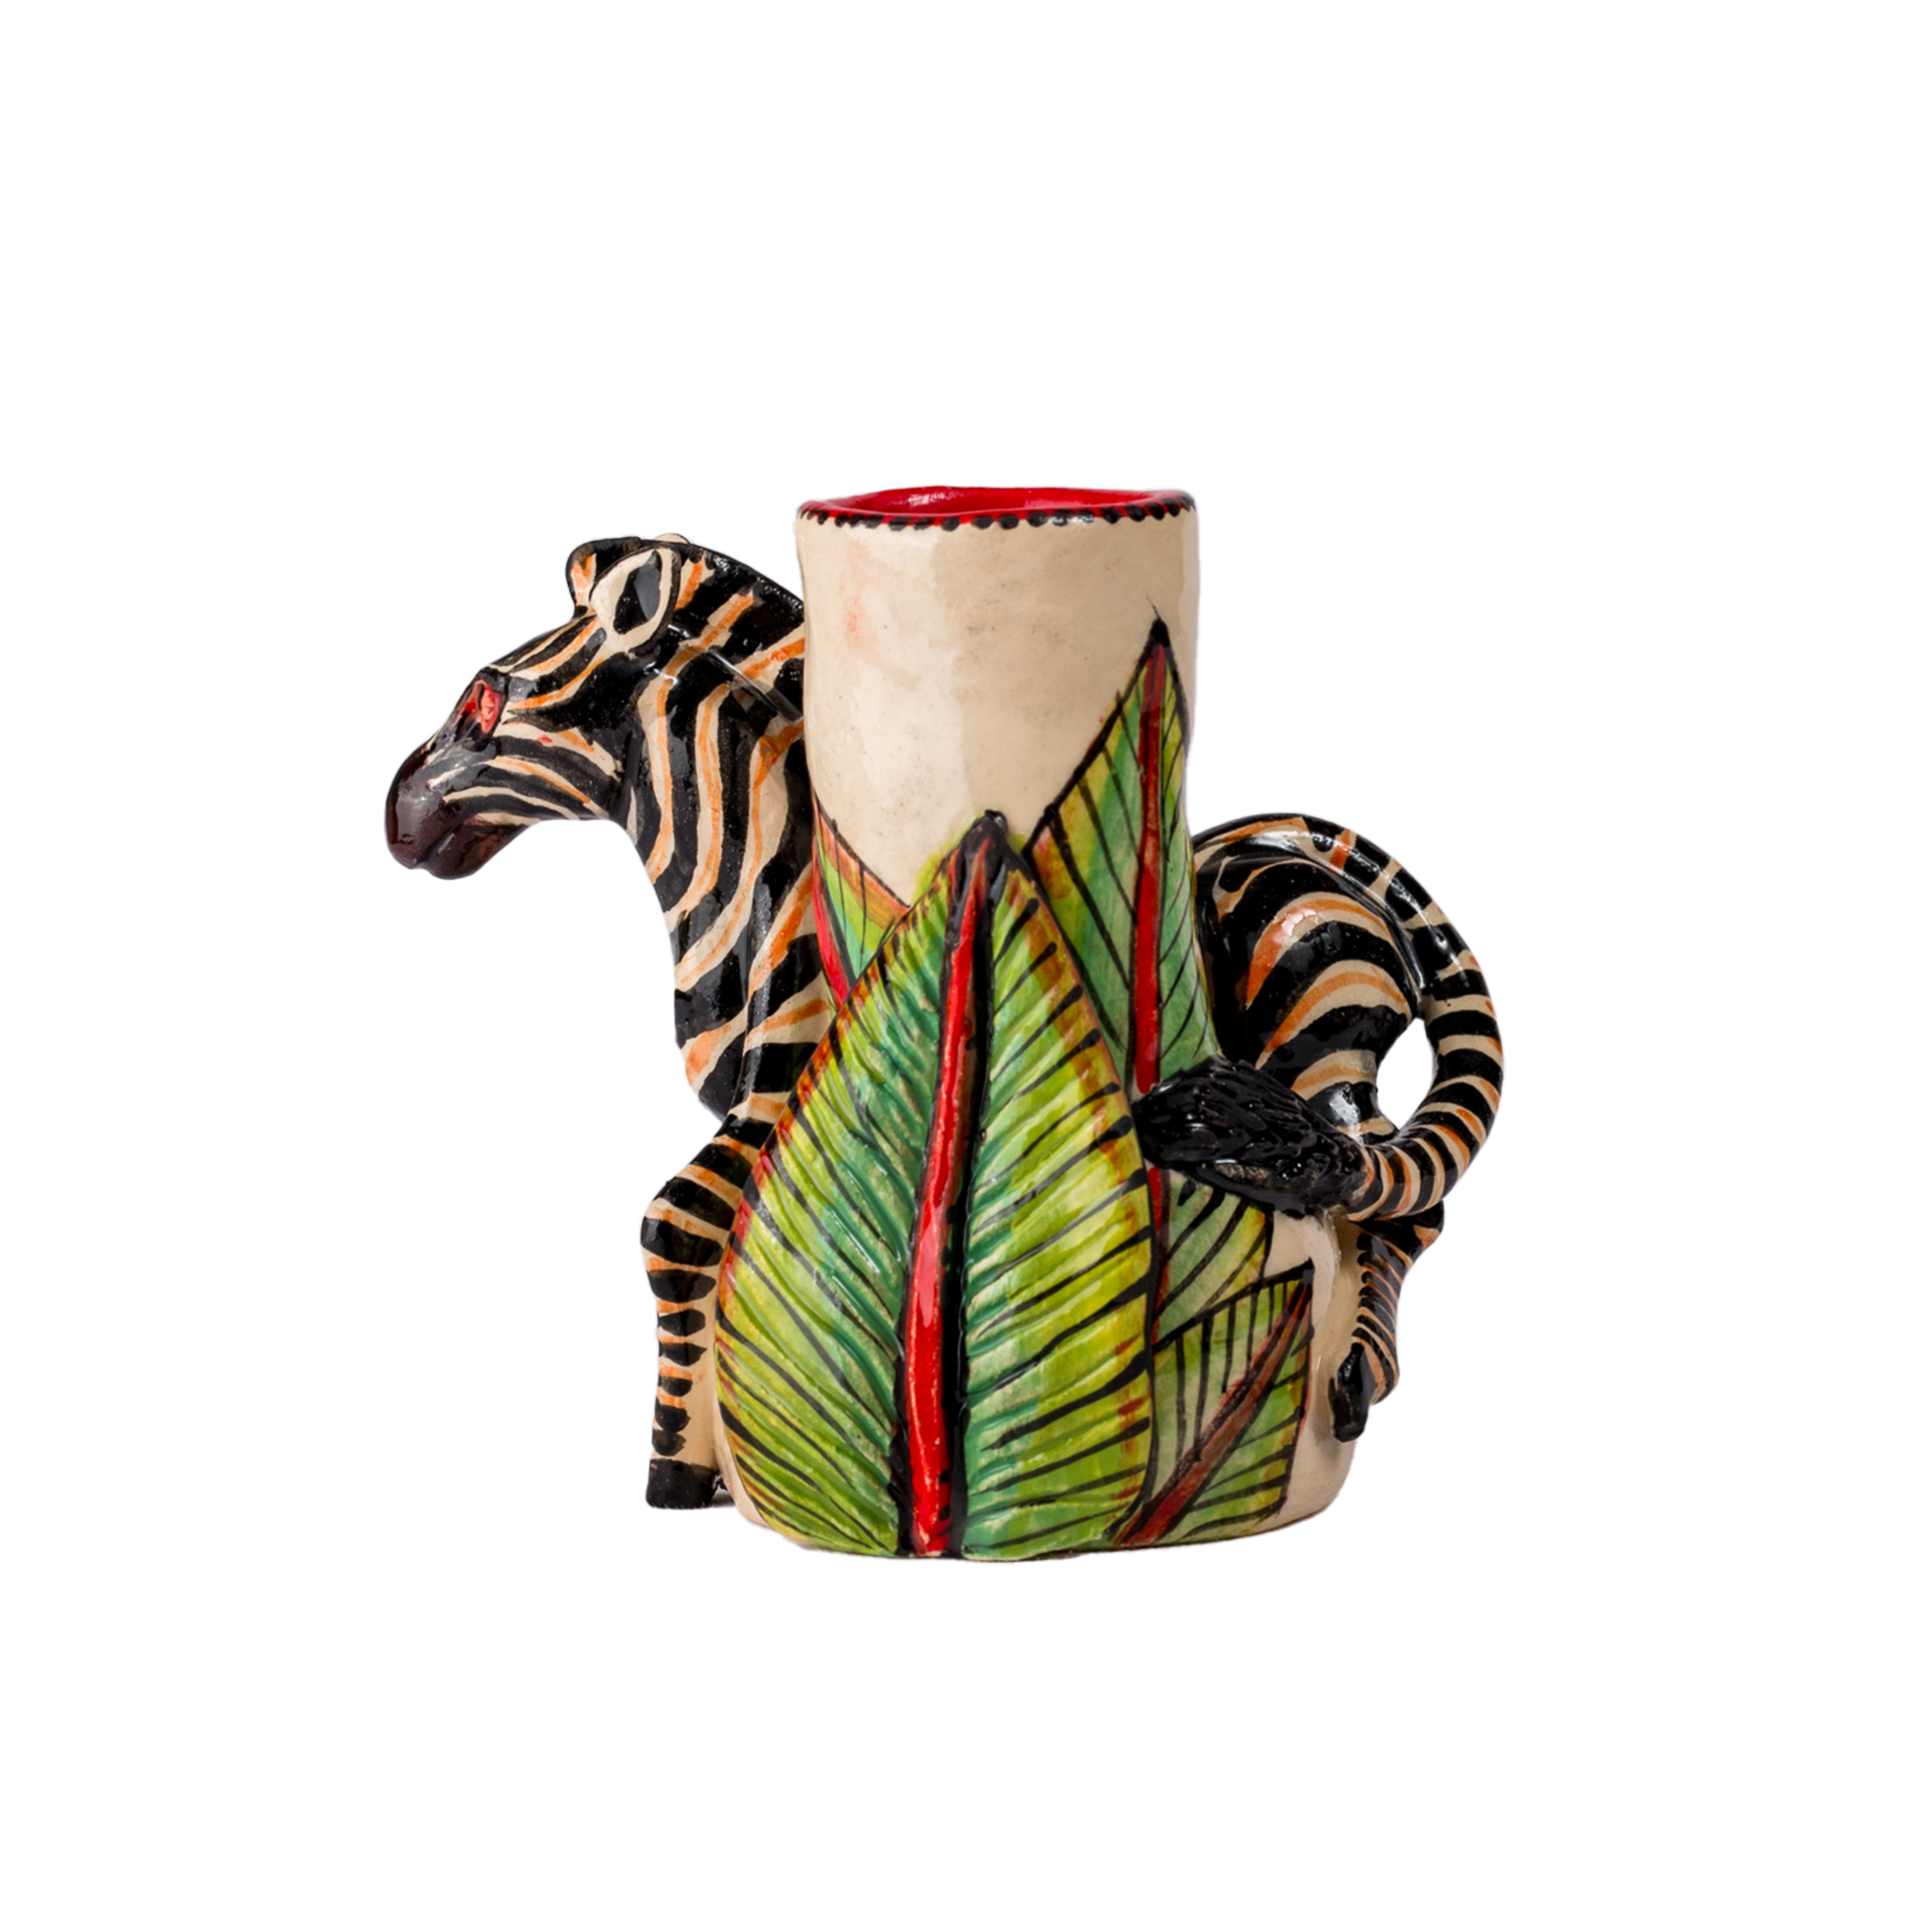 3D Ceramic Zebra Candle Holder